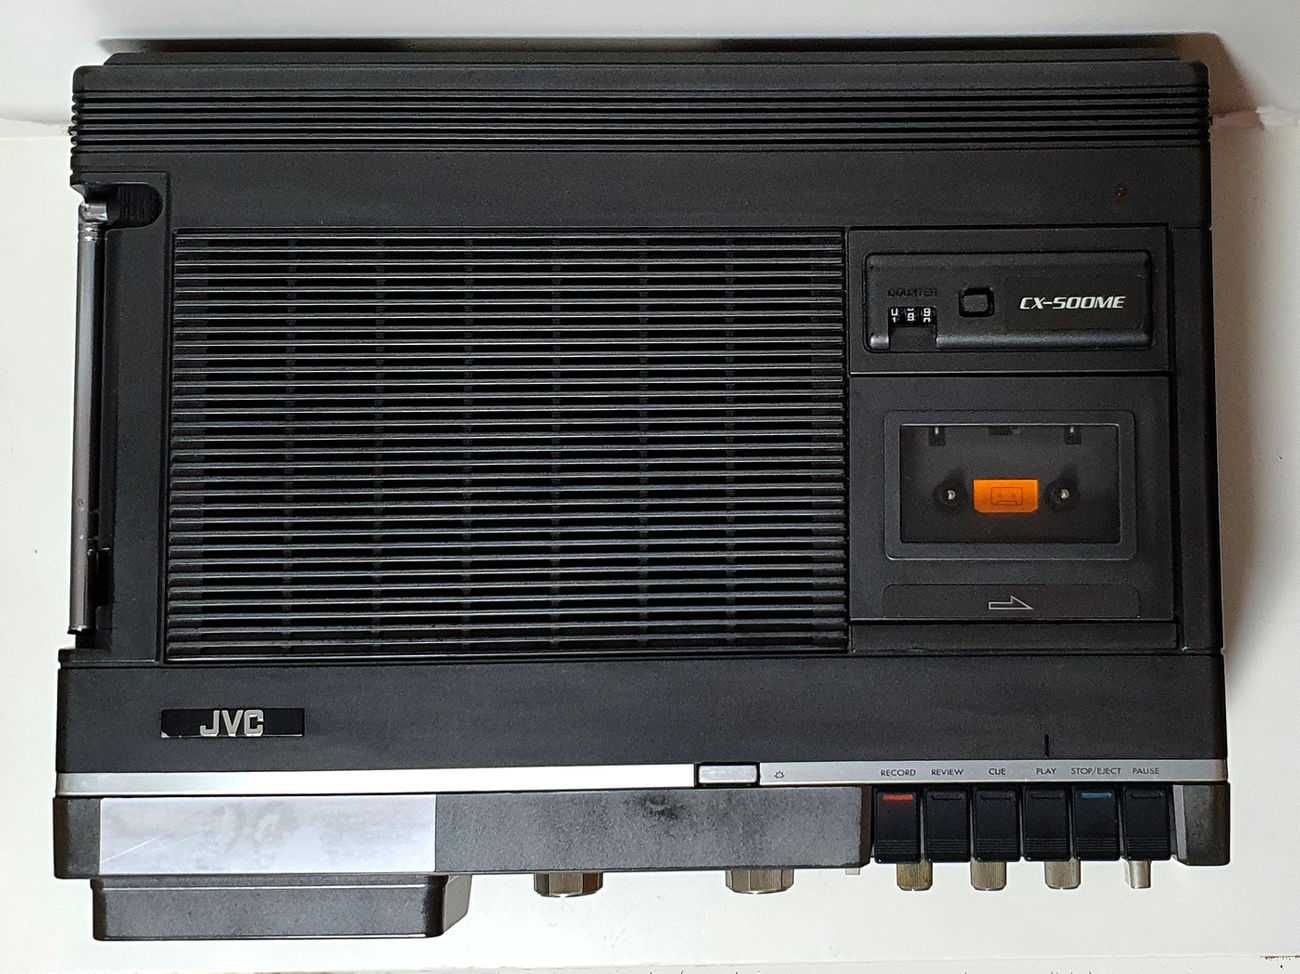 JVC CX-500ME  radio + magnetofon kasetowy + kolorowy TV / Vintage 1979